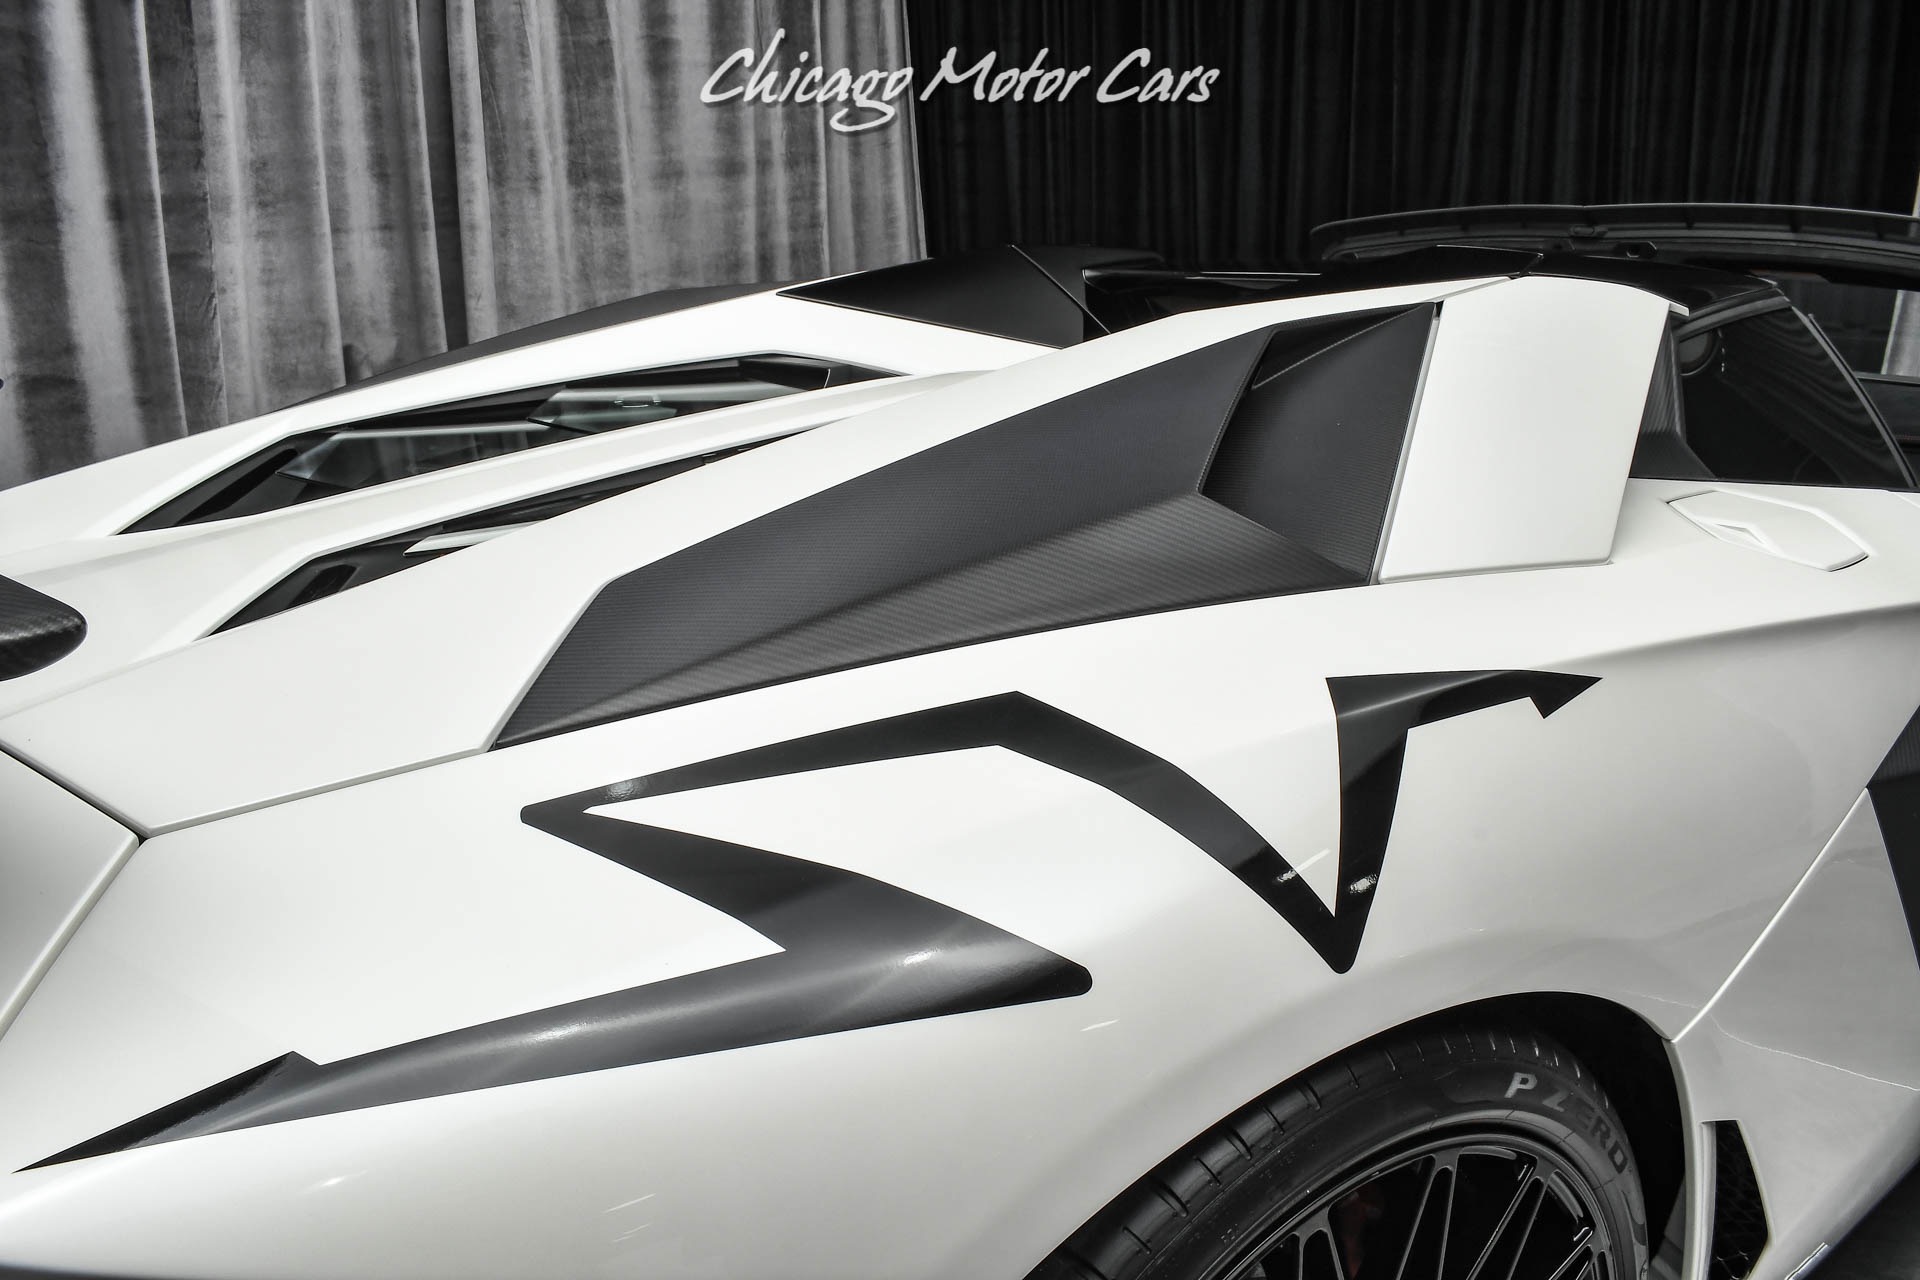 Used-2016-Lamborghini-Aventador-LP750-4-SV-Roadster-MSRP-606K-TONS-OF-CARBON-FIBER-Serviced-9k-Miles